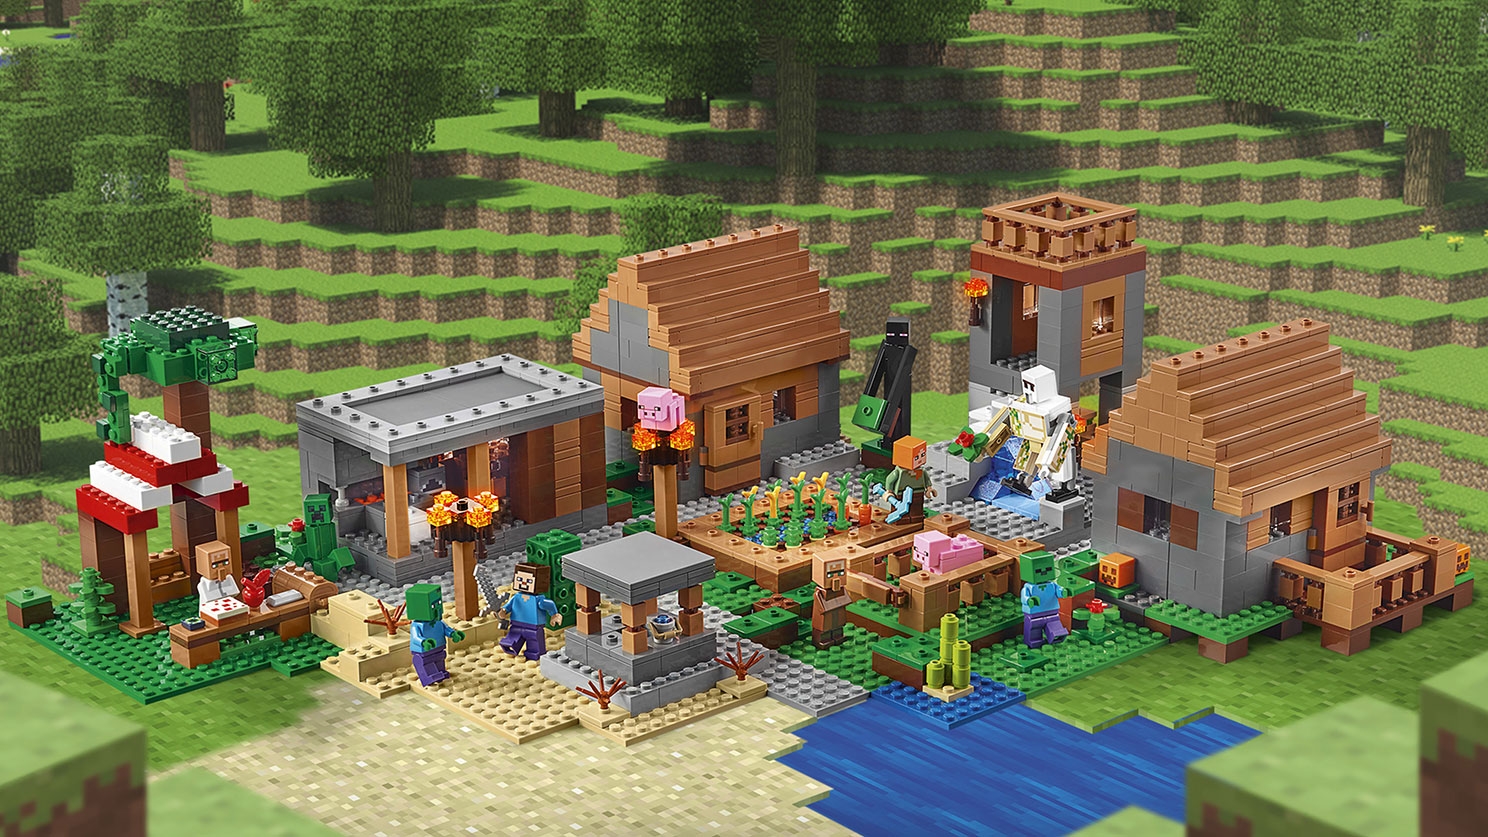 The Village Lego Minecraft Sets Lego Com For Kids